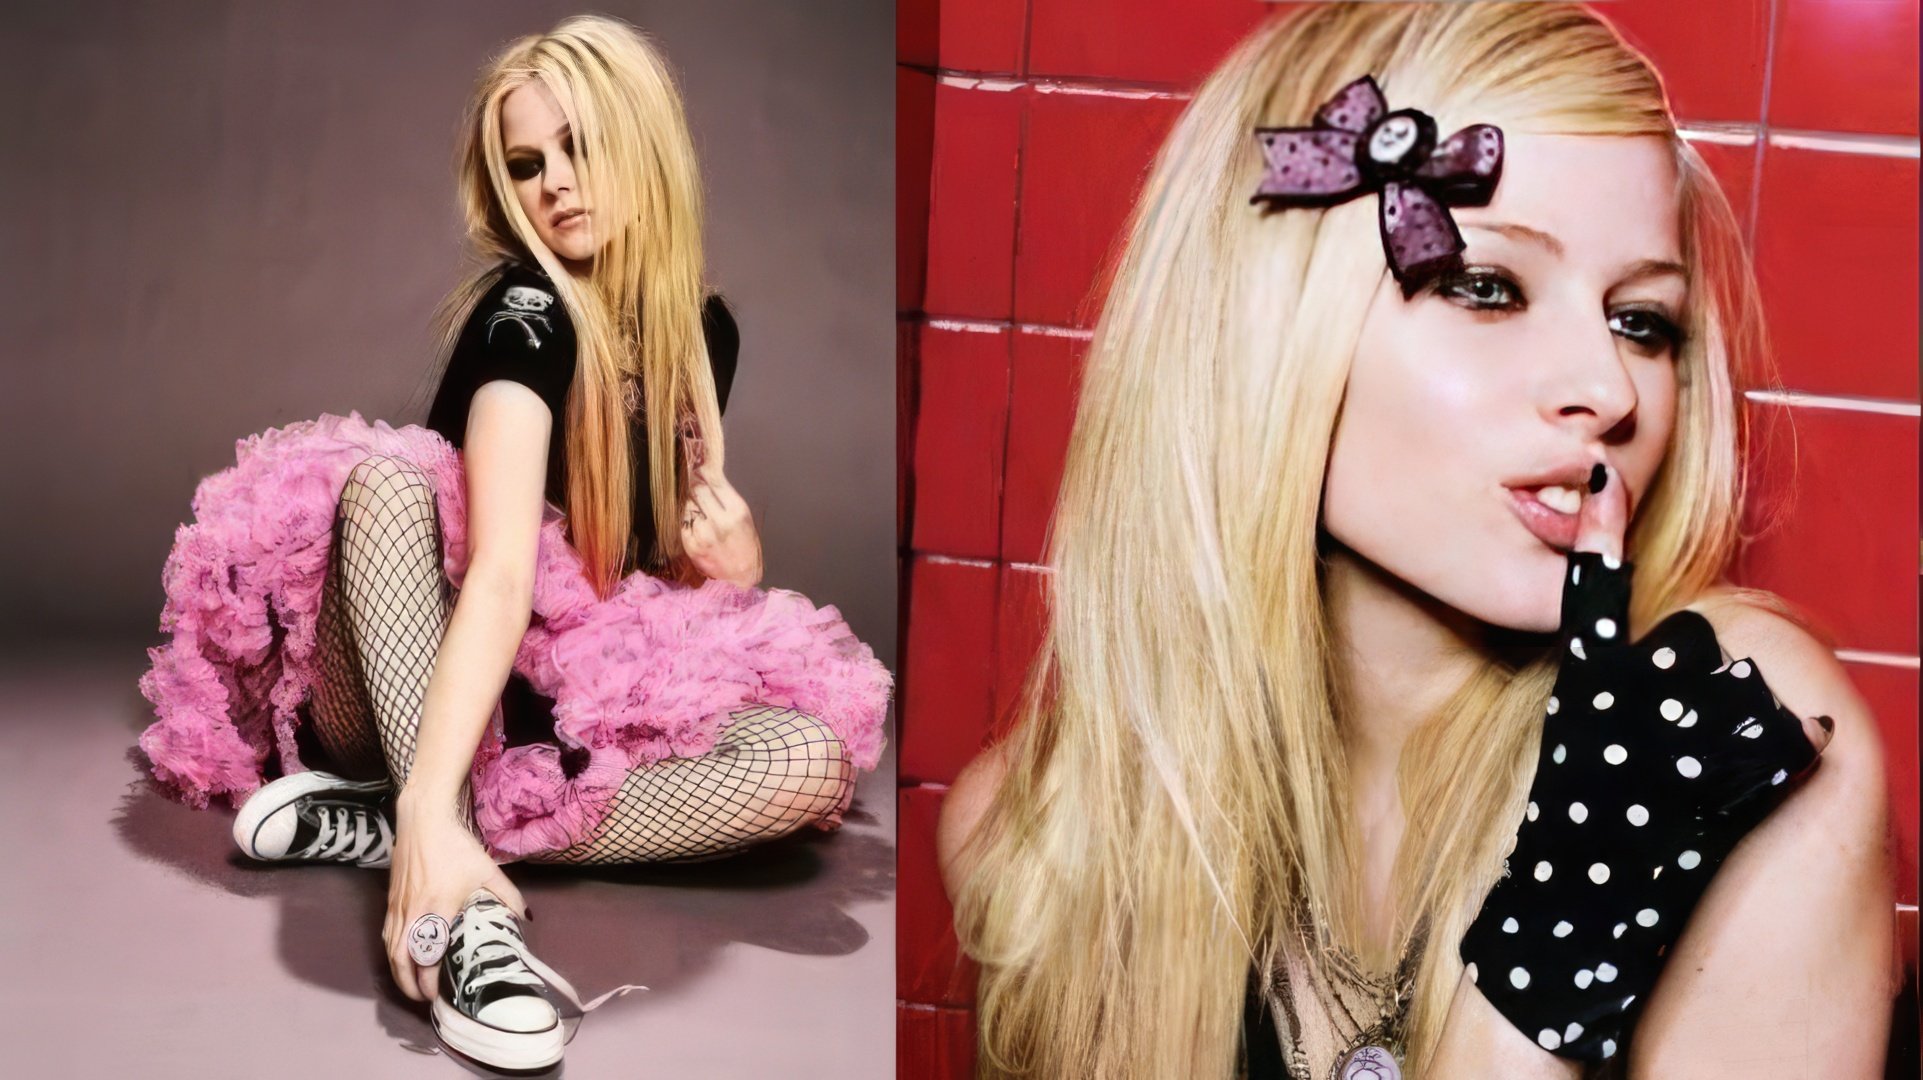  'Punk Princess' Avril Lavigne